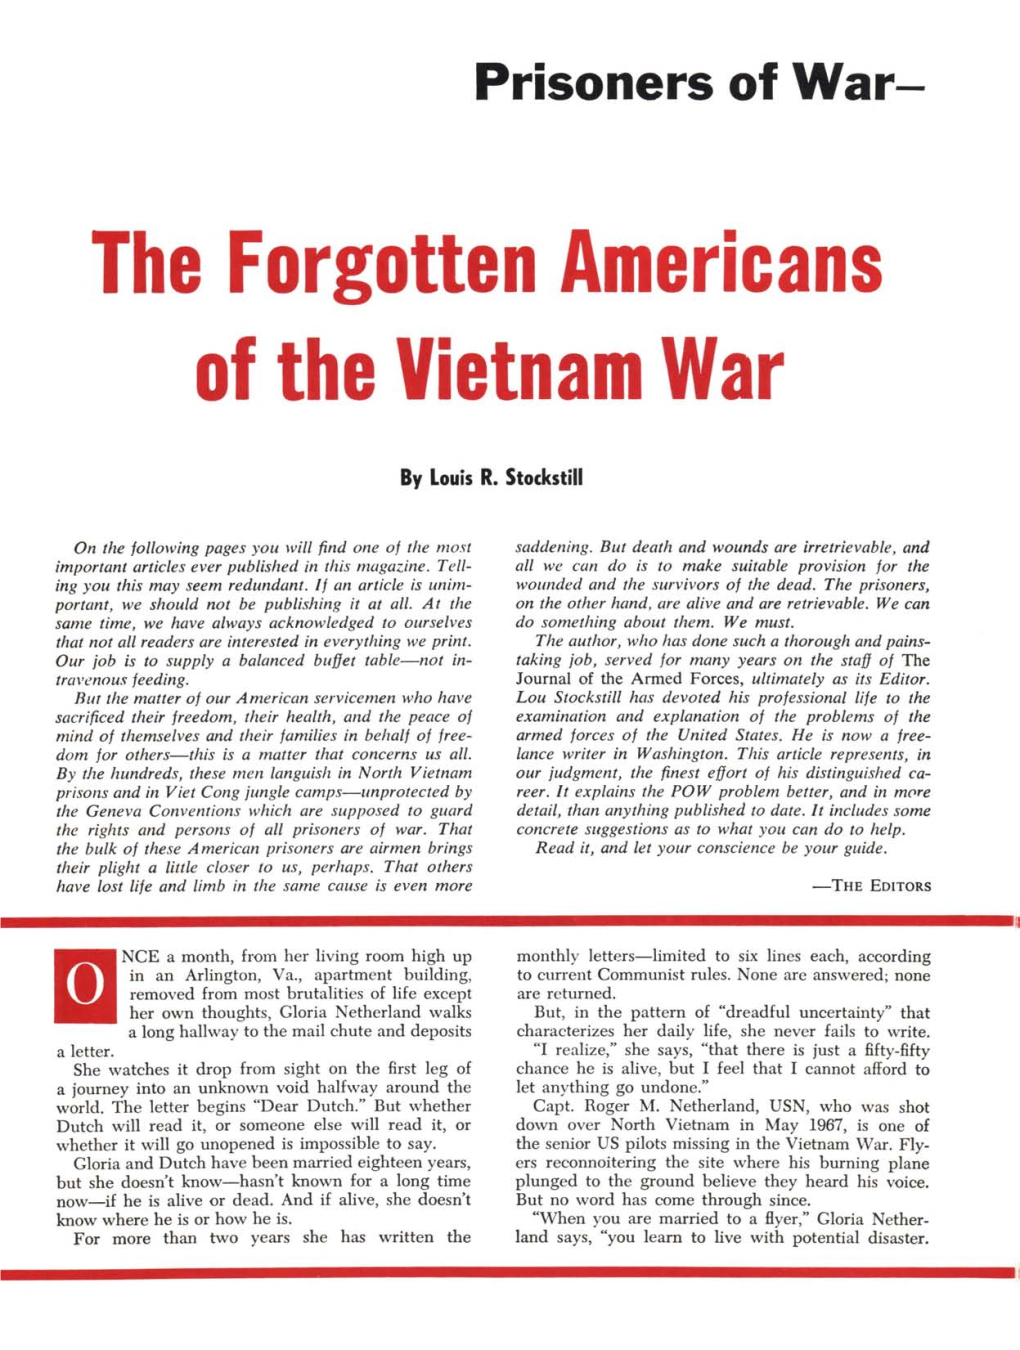 The Forgotten Americans of the Vietnam War